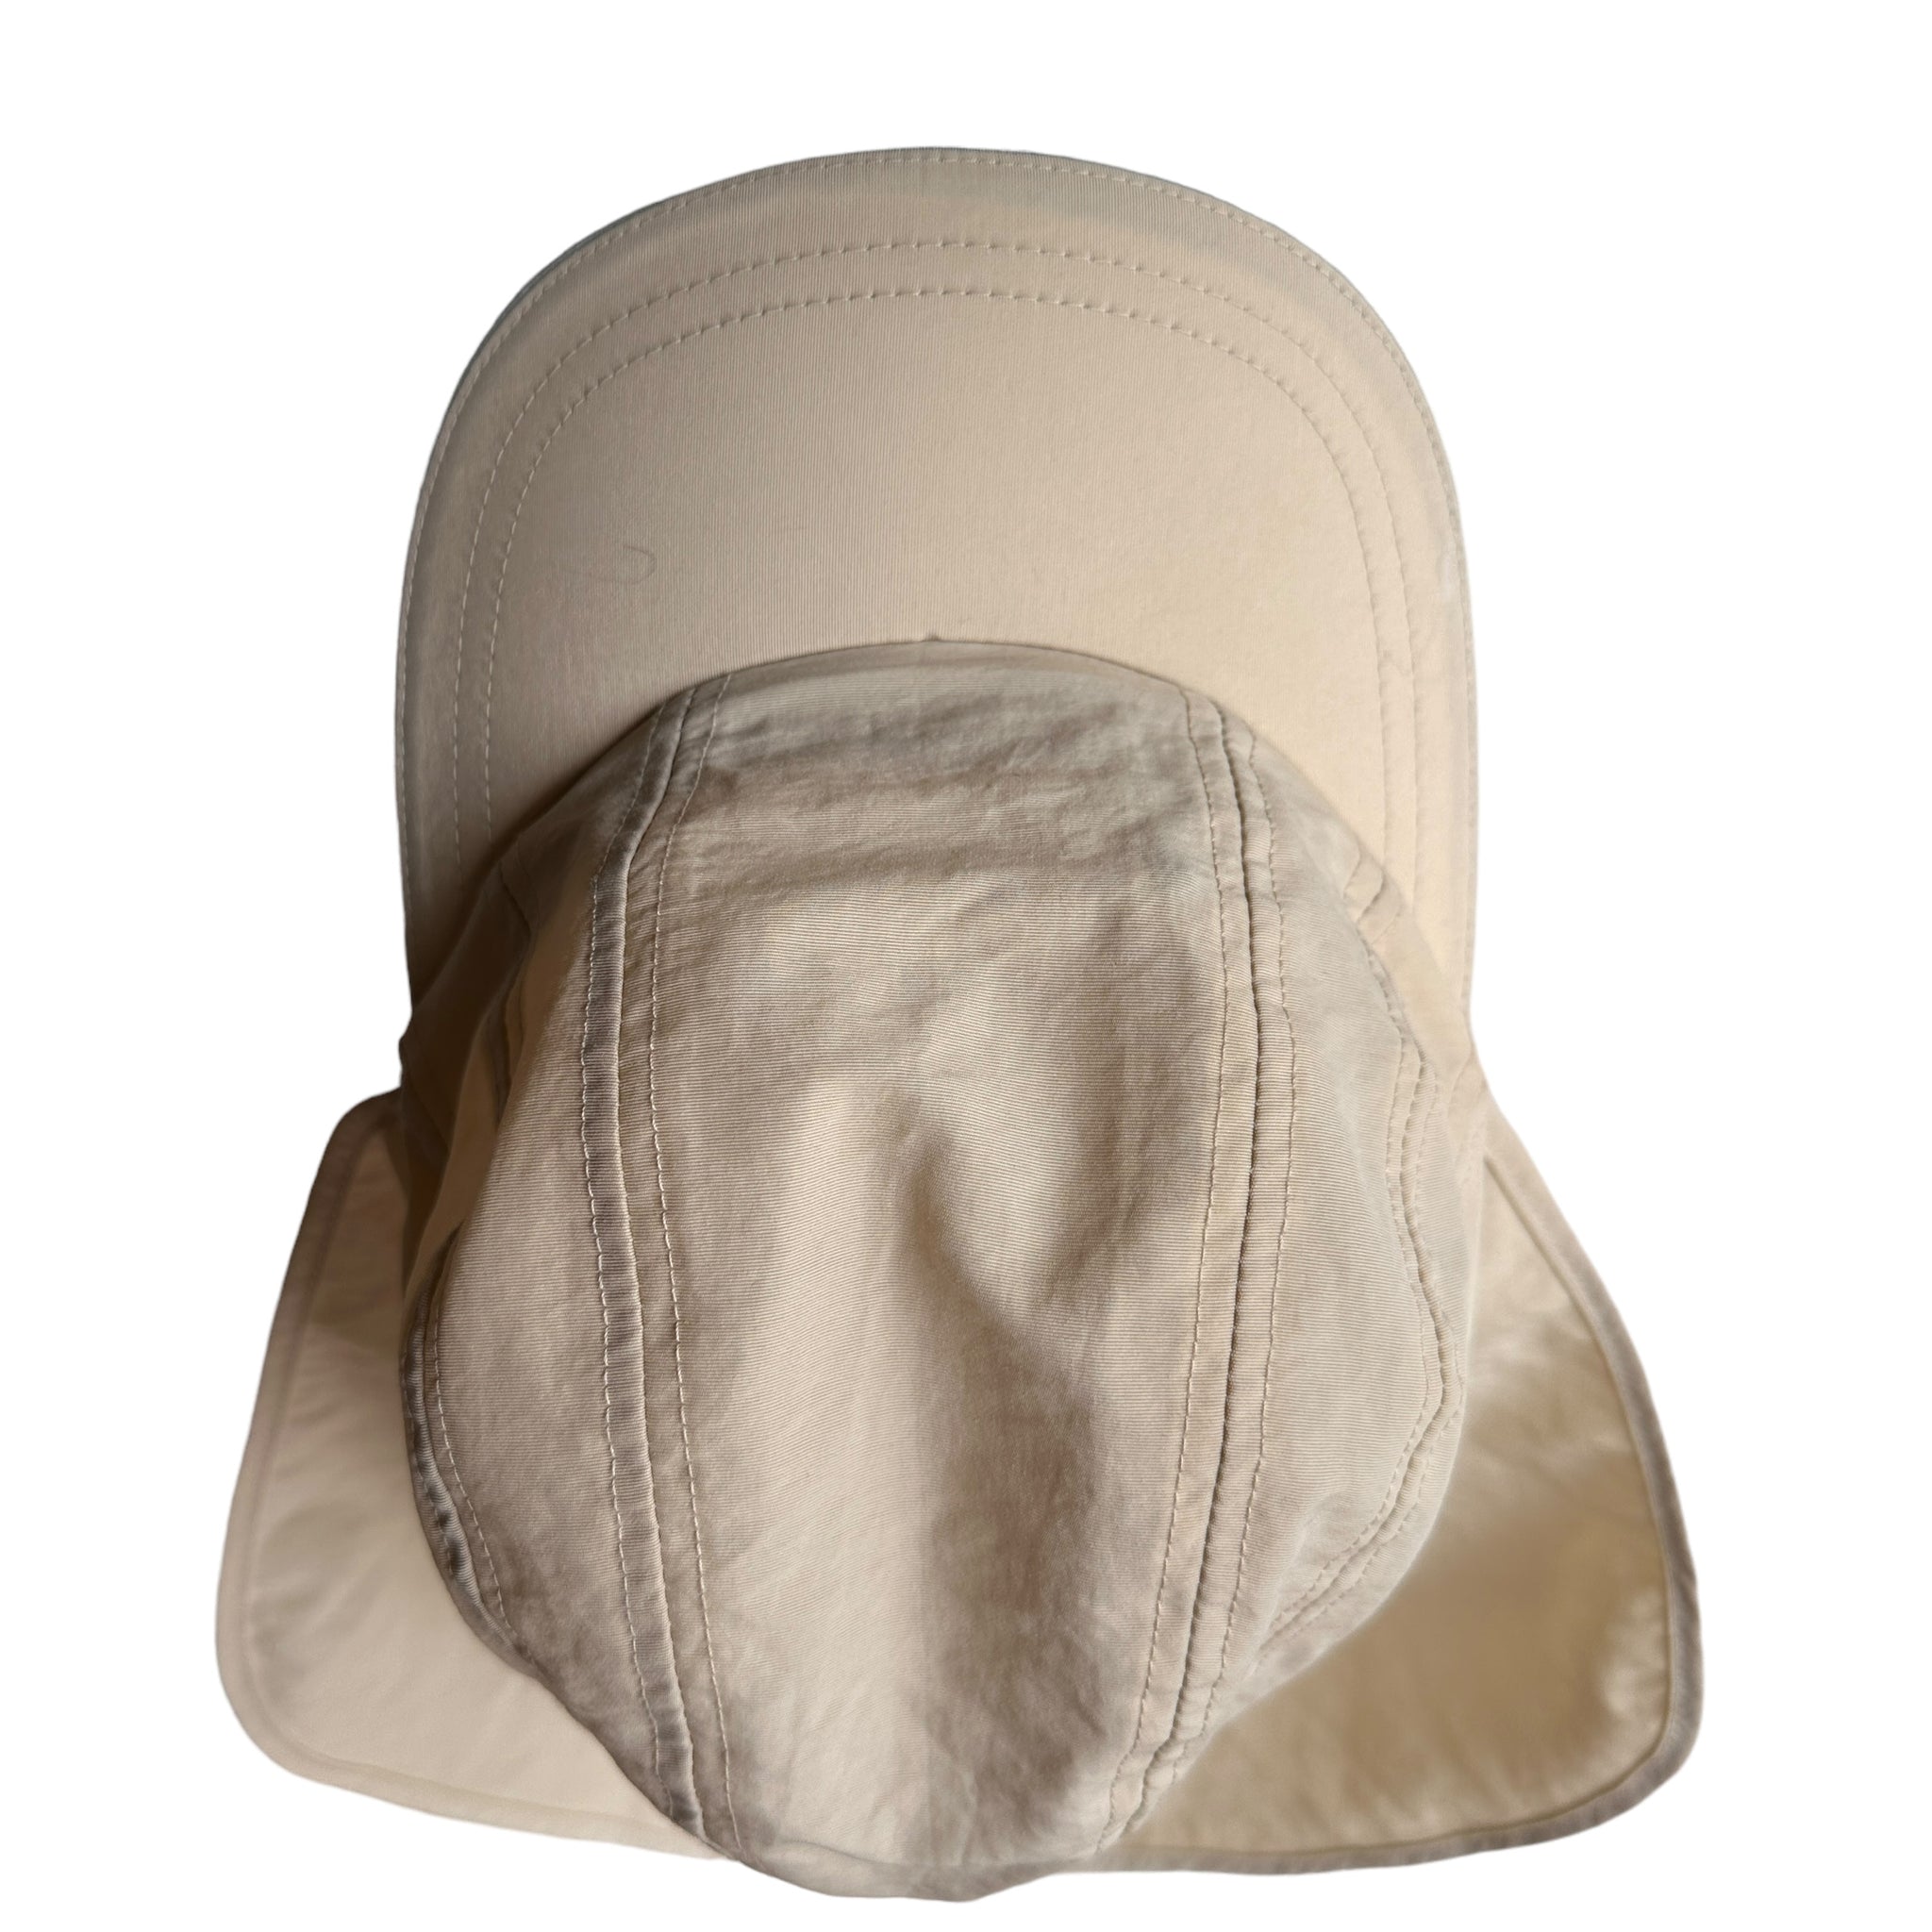 MEC Made in canada🇨🇦 light nylon sun hat